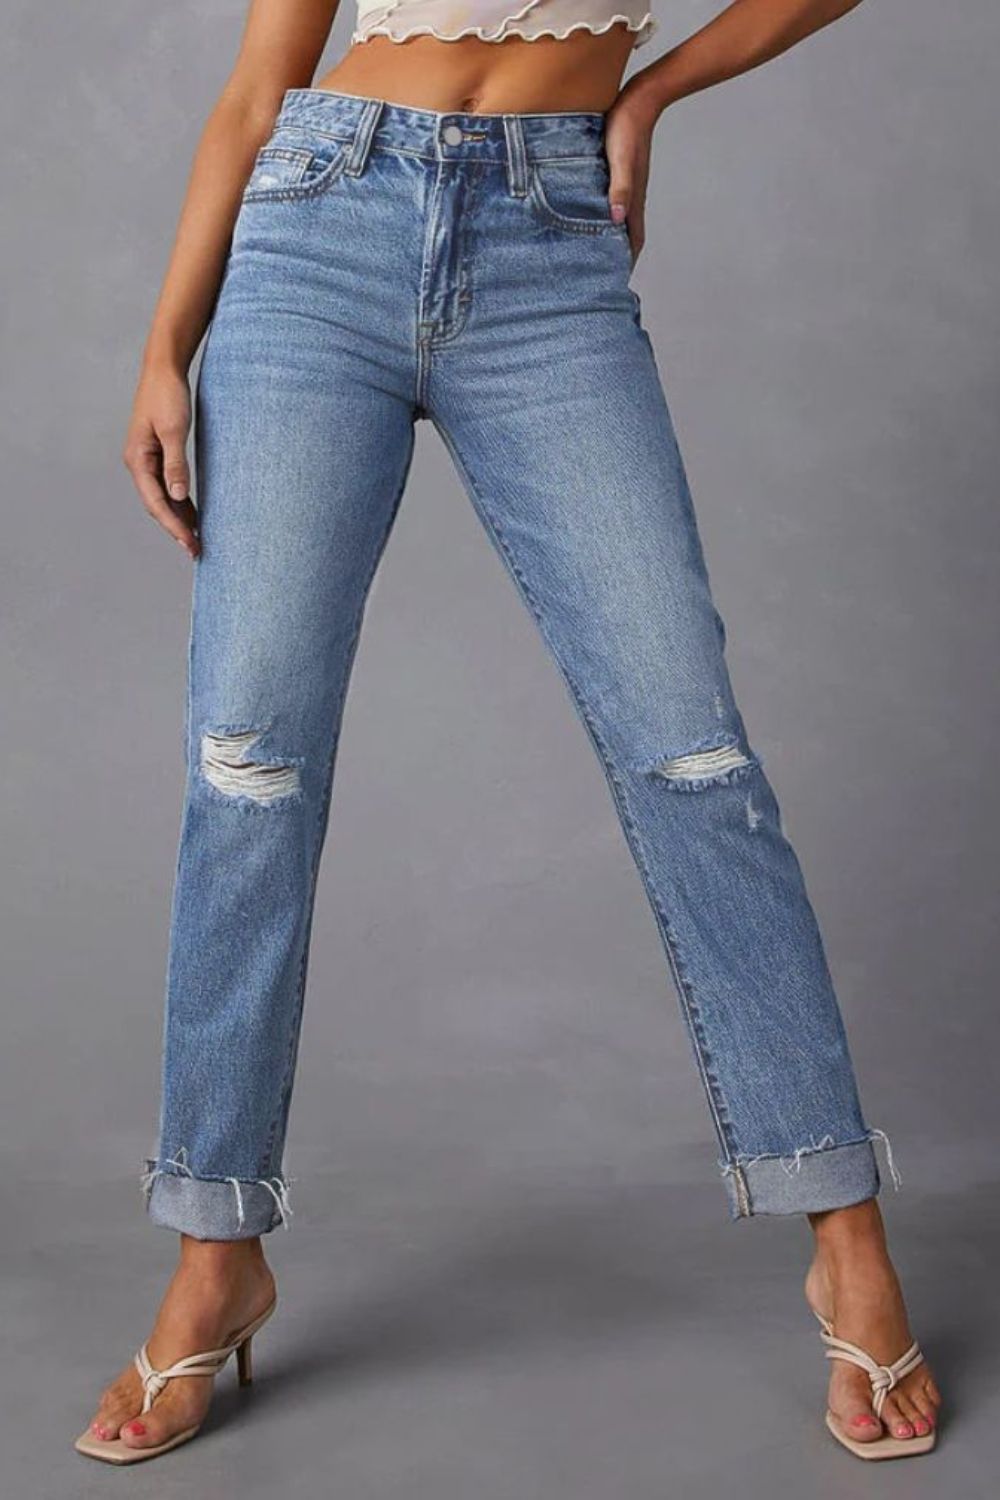 Distressed Raw Hem Straight Jeans with Pockets Bottom wear